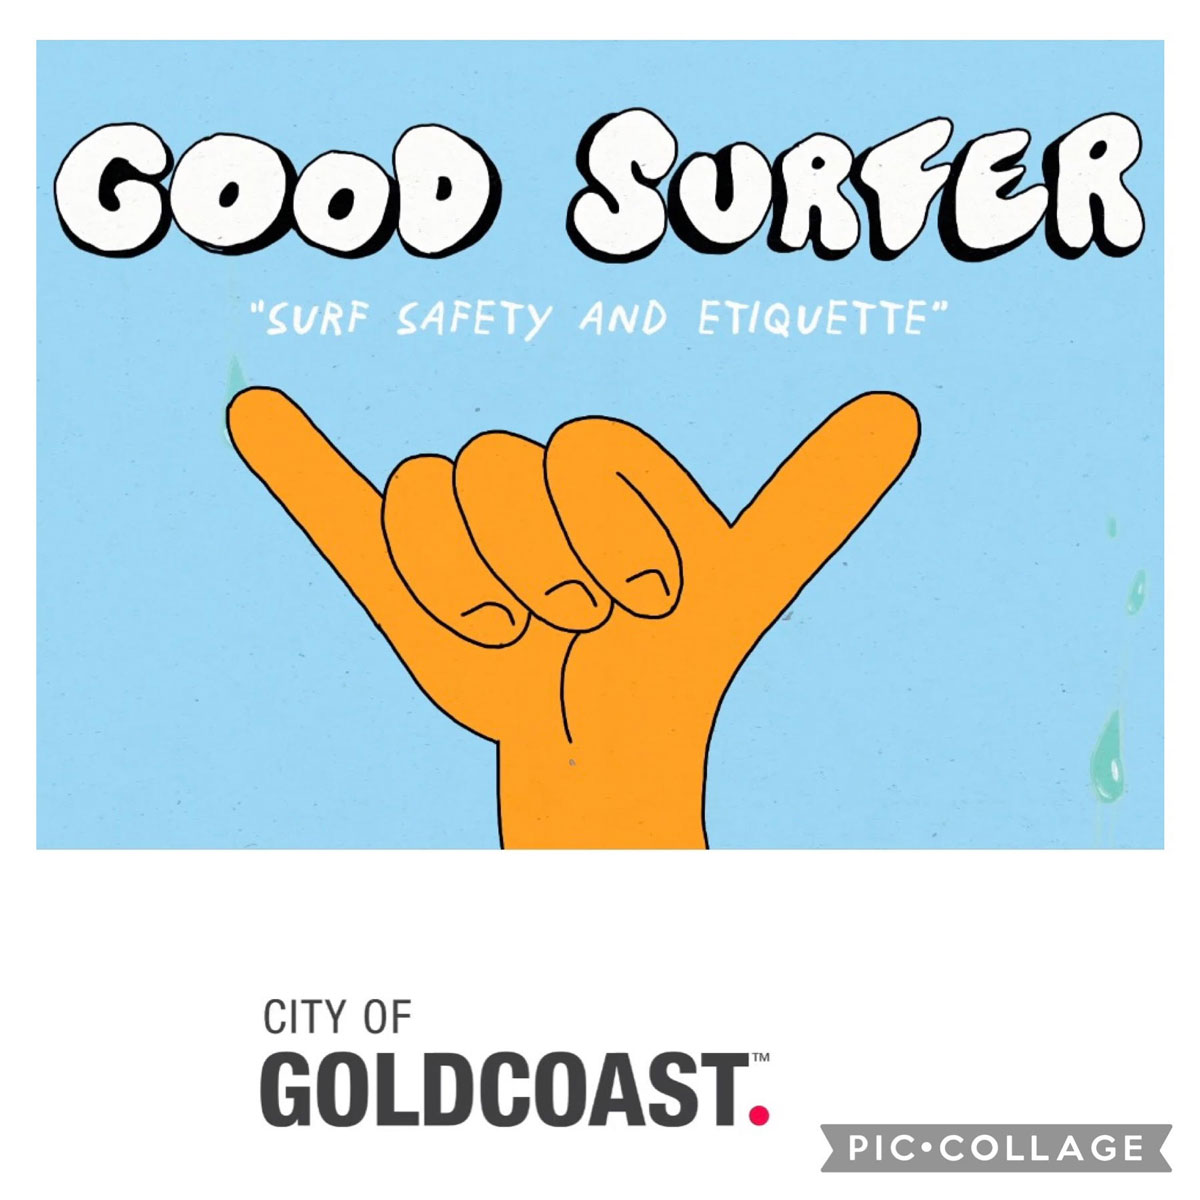 Good Surfer - Gold Coast